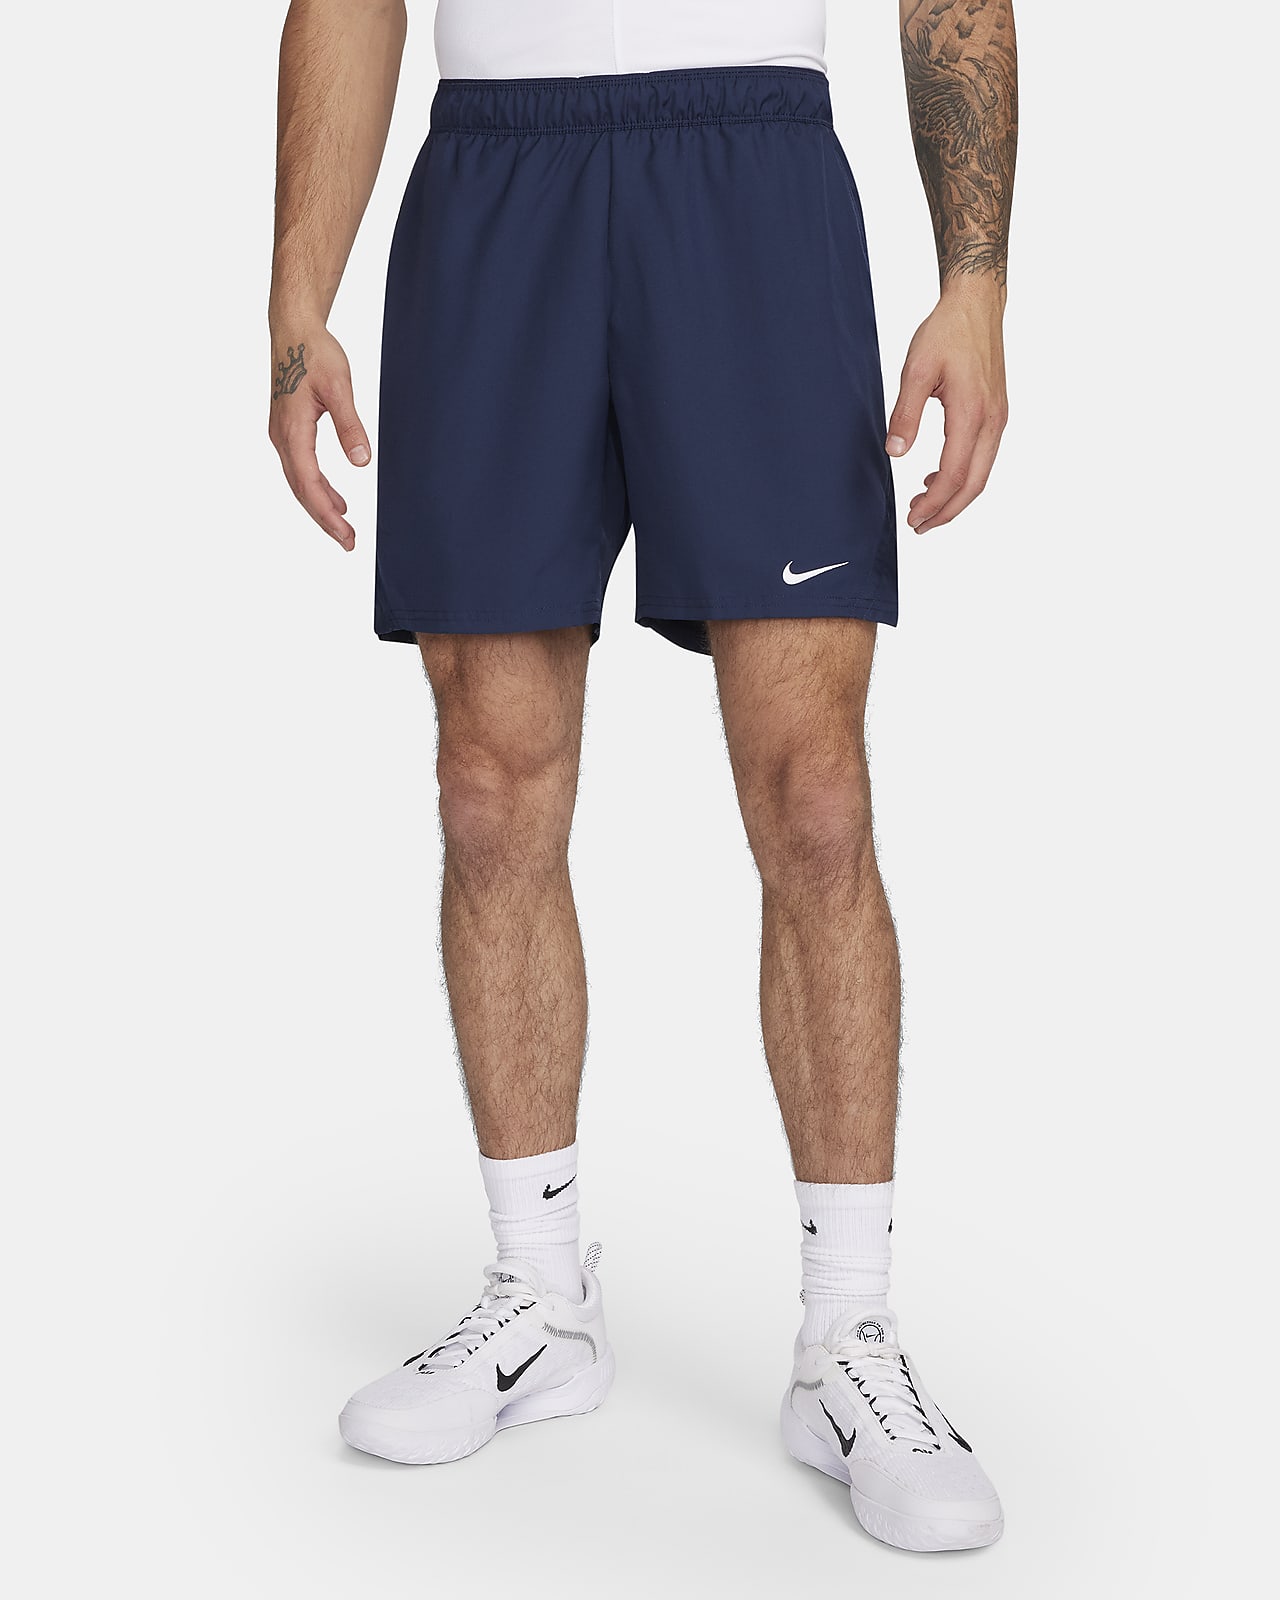 NikeCourt Men's Tennis Trousers. Nike FI